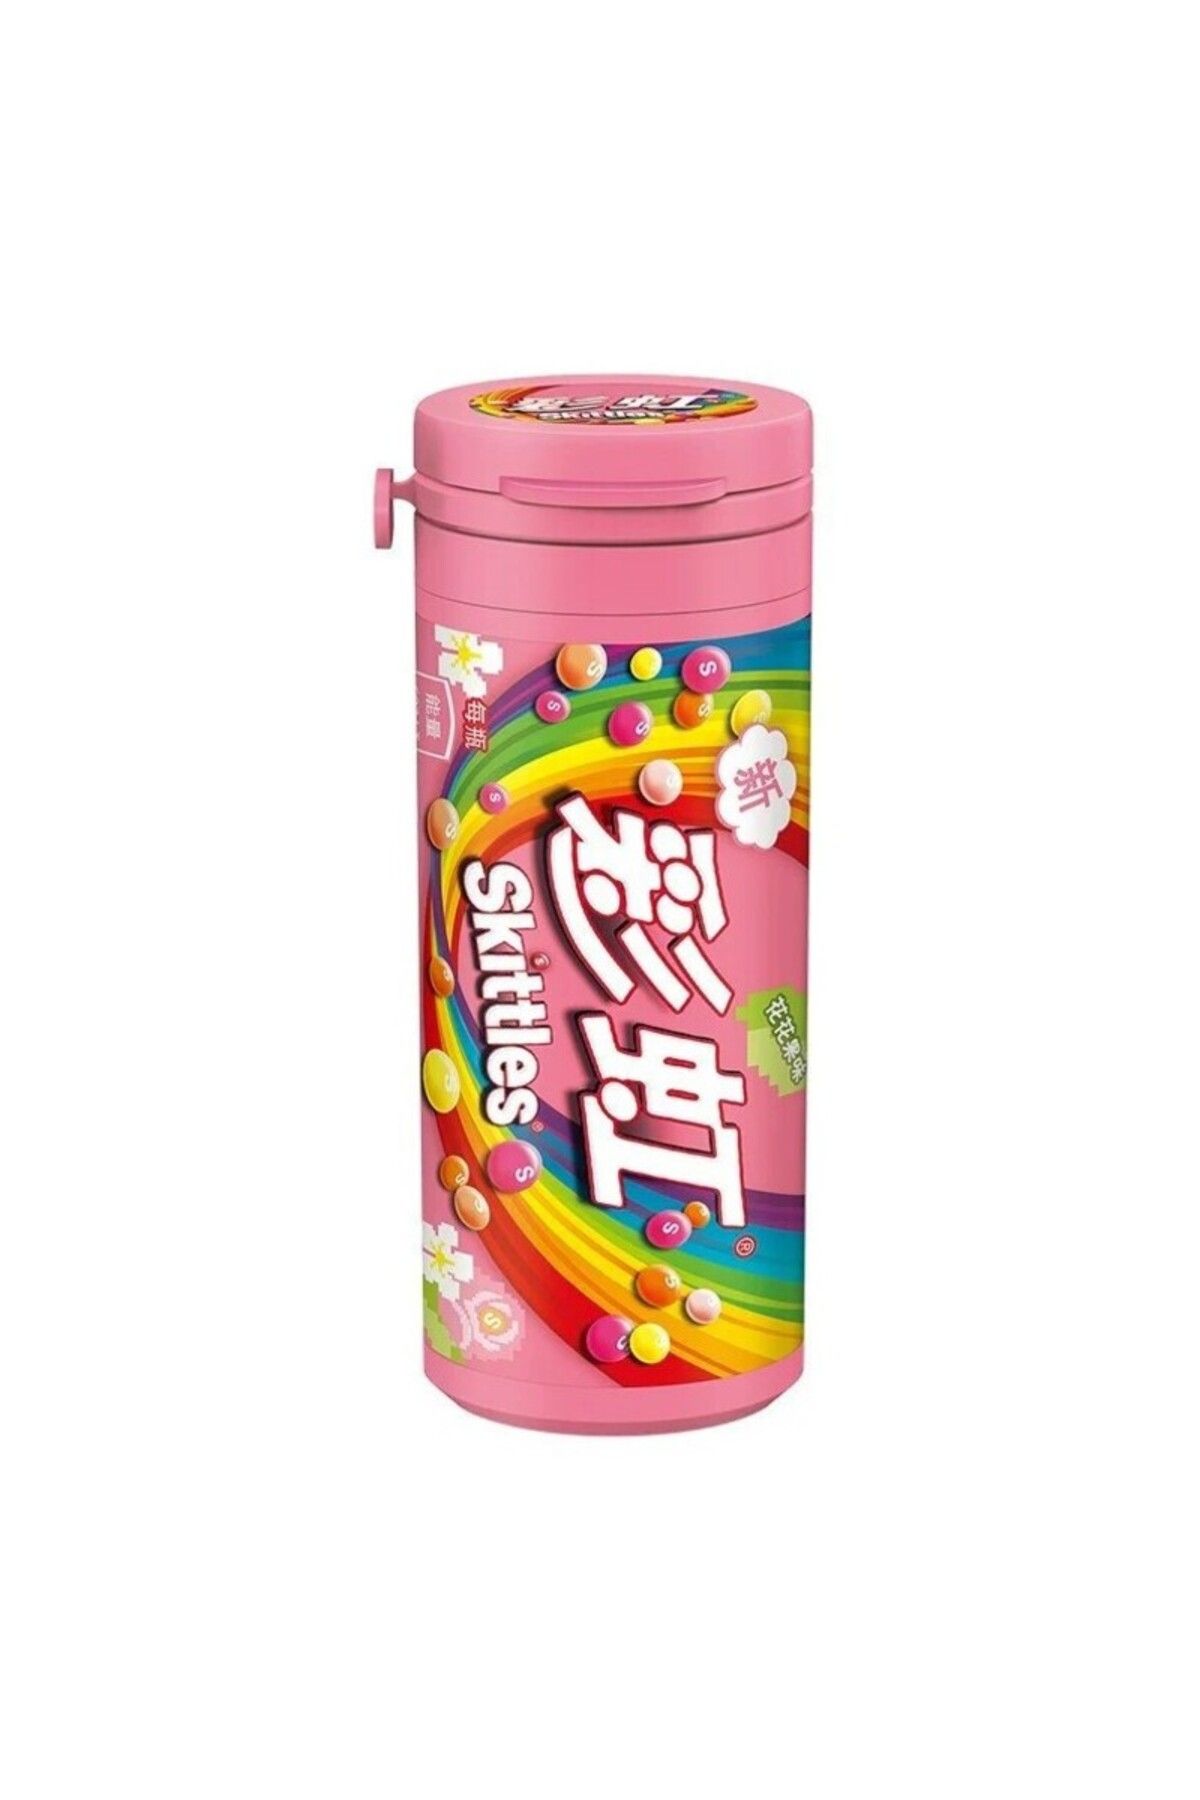 Skittles Rainbow Flower & Fruit Candy 30g